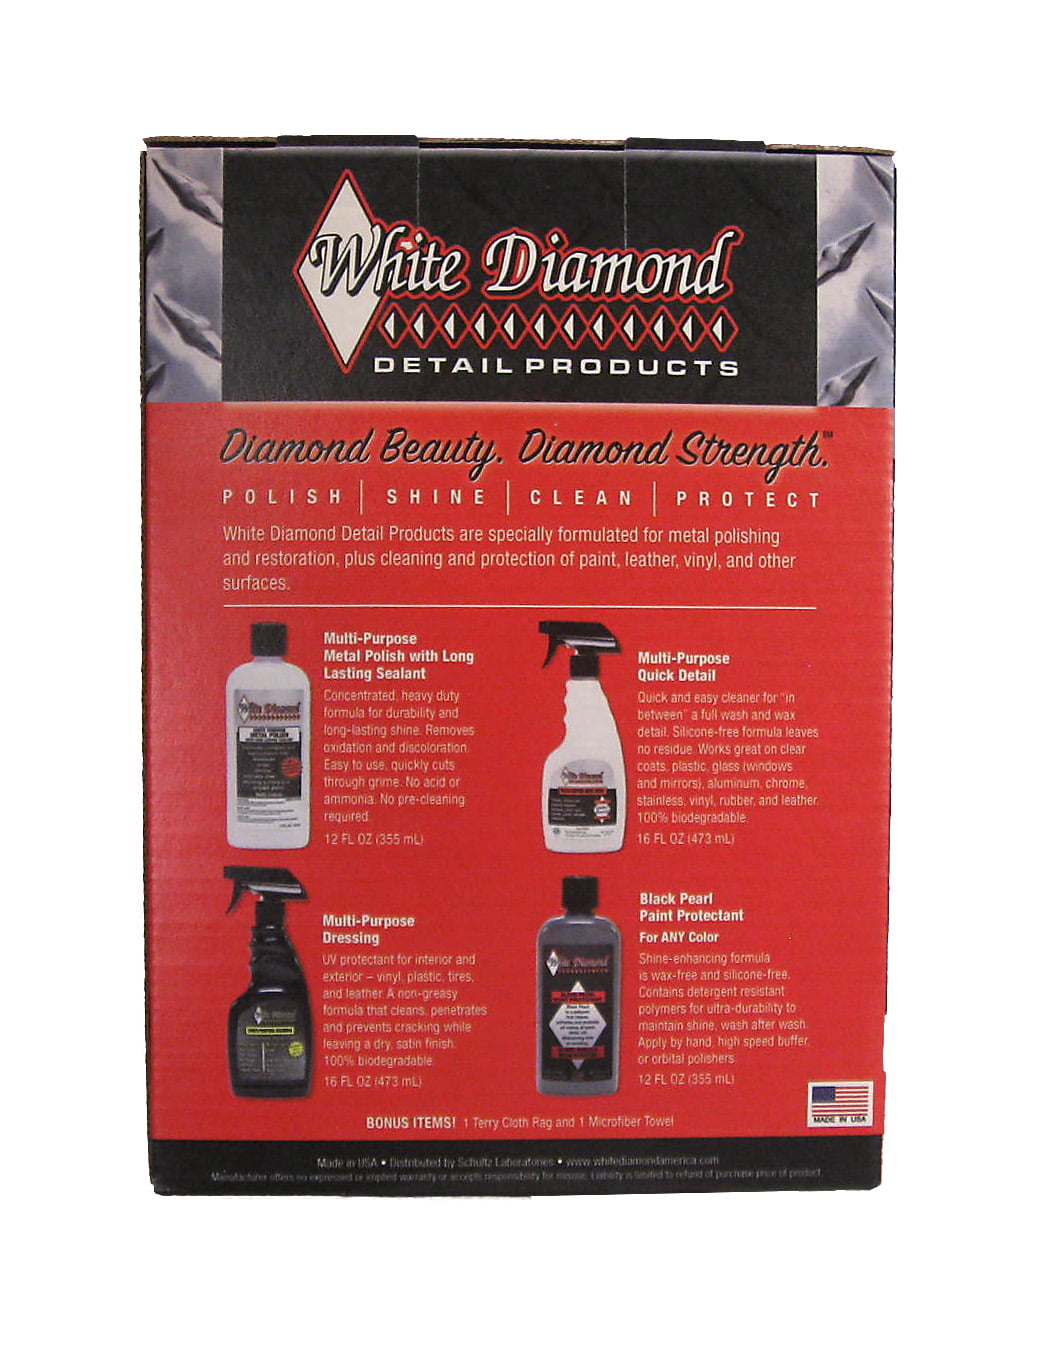 White Diamond polishing products support GP Originals